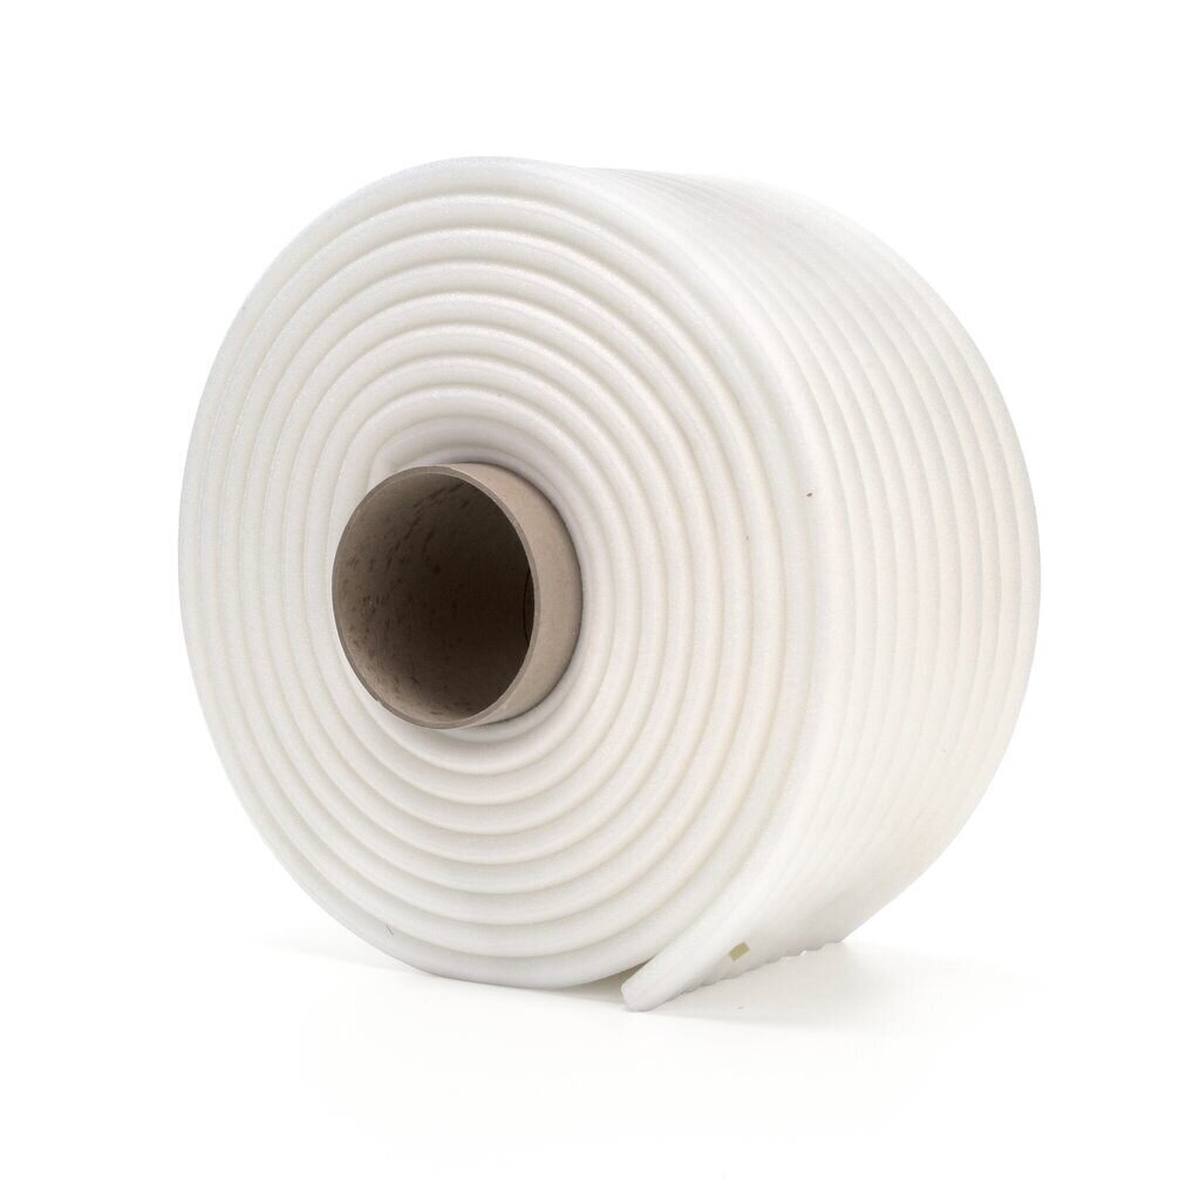 3M Soft Edge Foam ruban de masquage, blanc, 50 m x 13 mm, 1pack=3pcs #09678